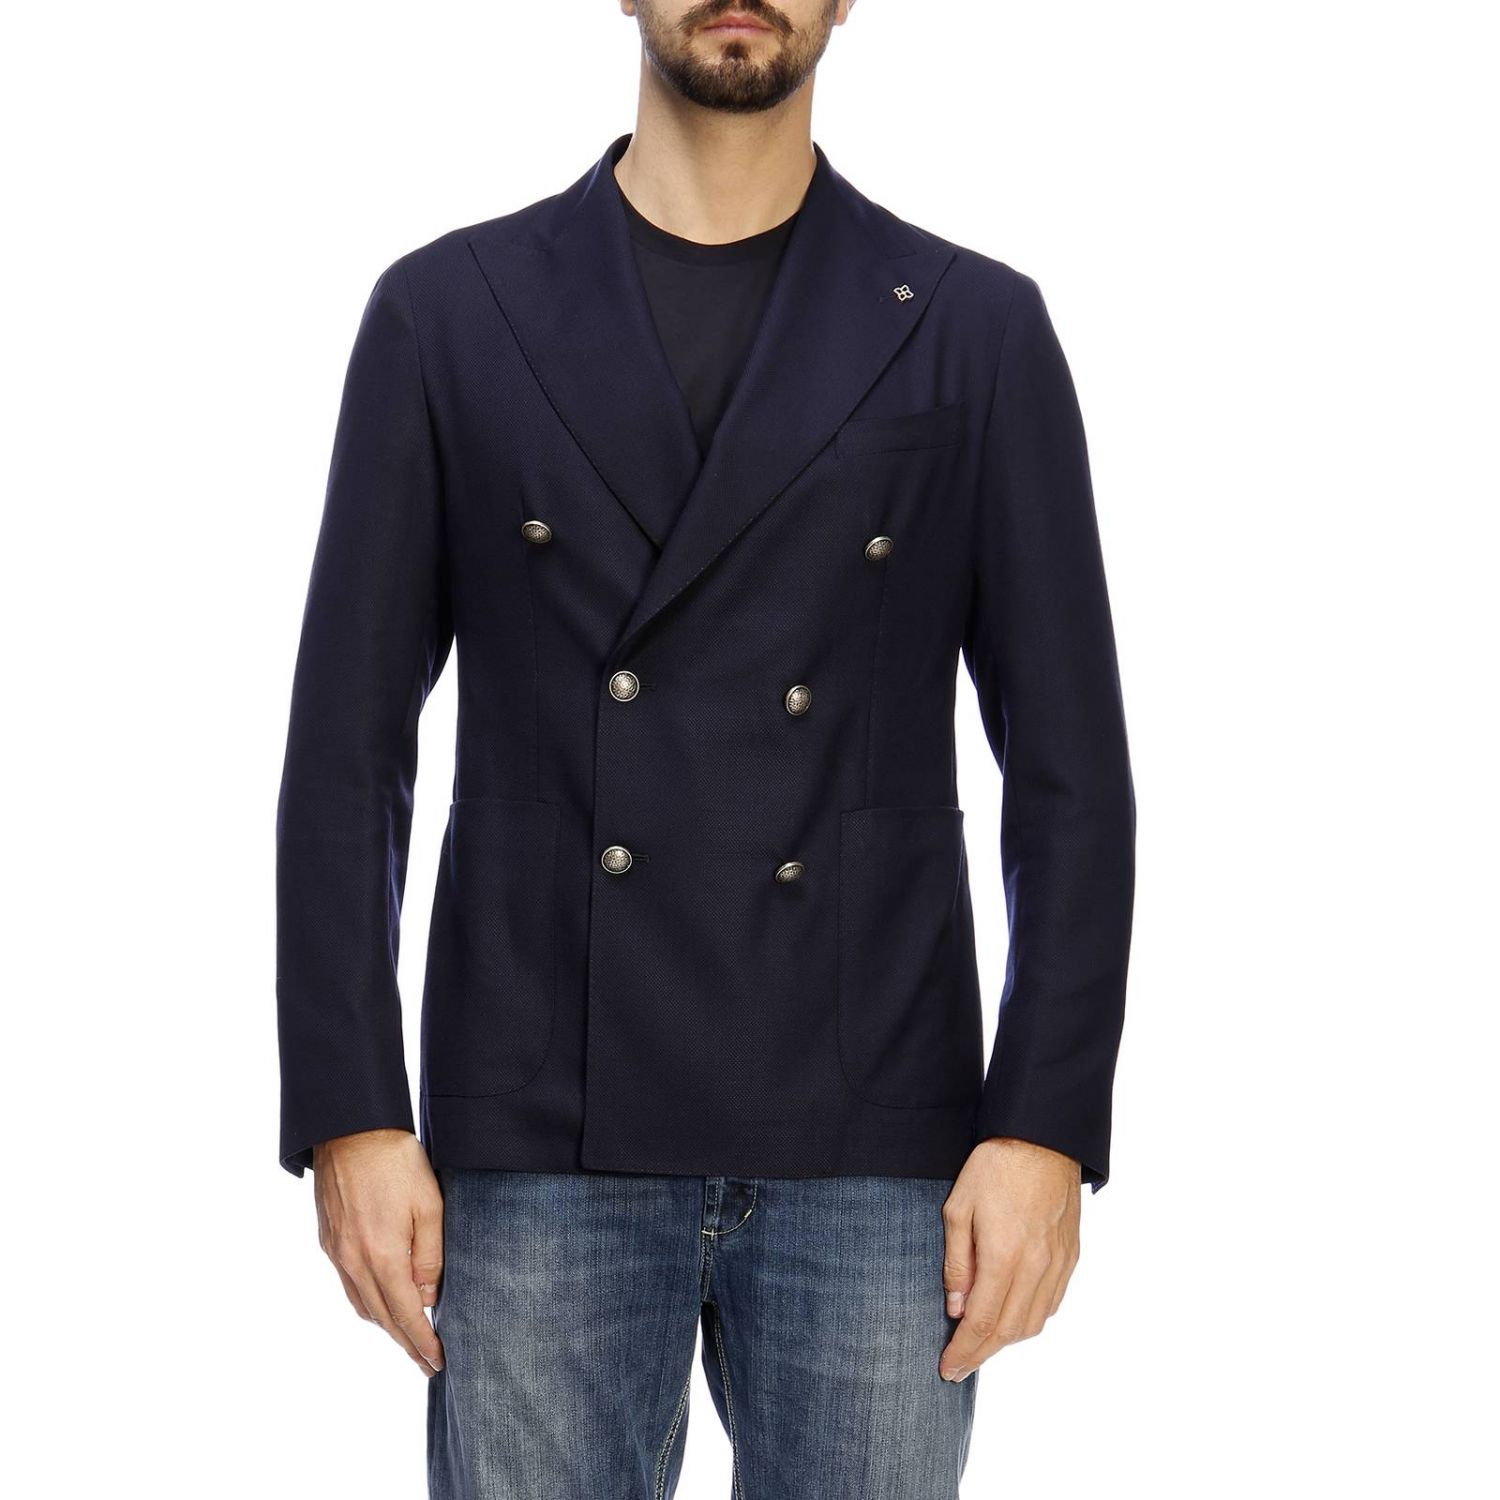 Tagliatore Outlet: Jacket men - Blue | Jacket Tagliatore ...